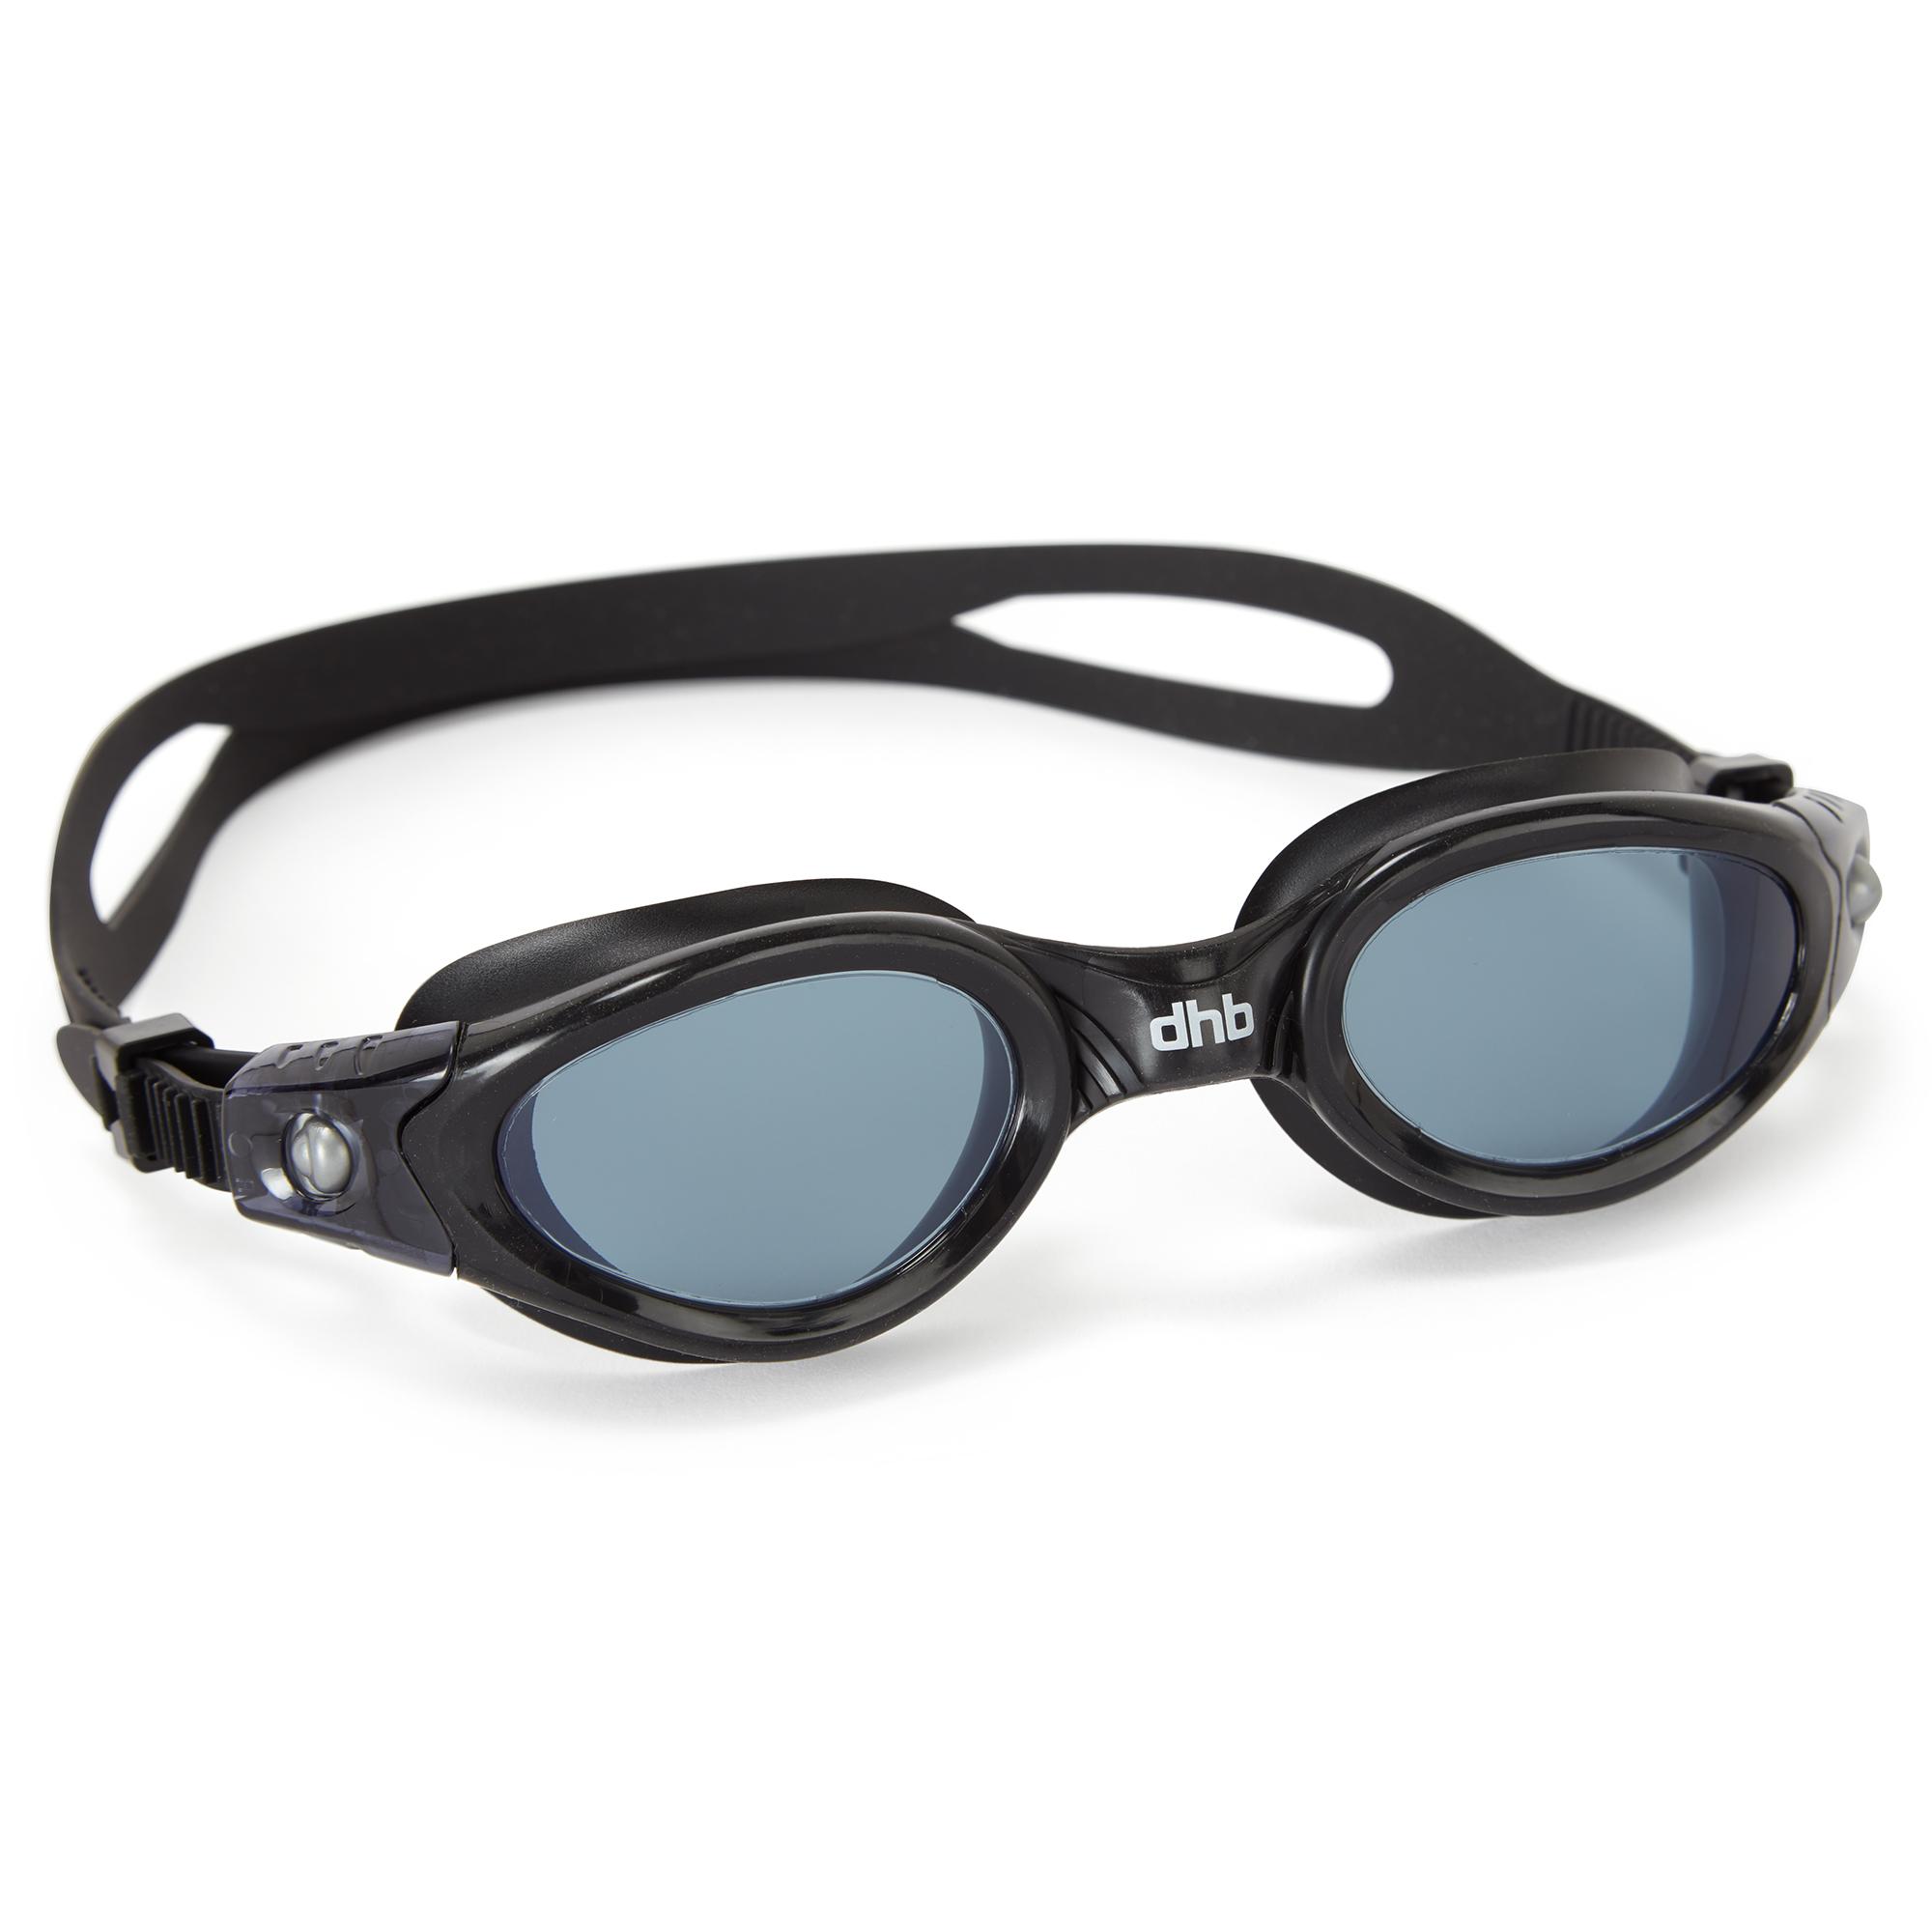 Dhb Hydron Goggles - Clear - Black